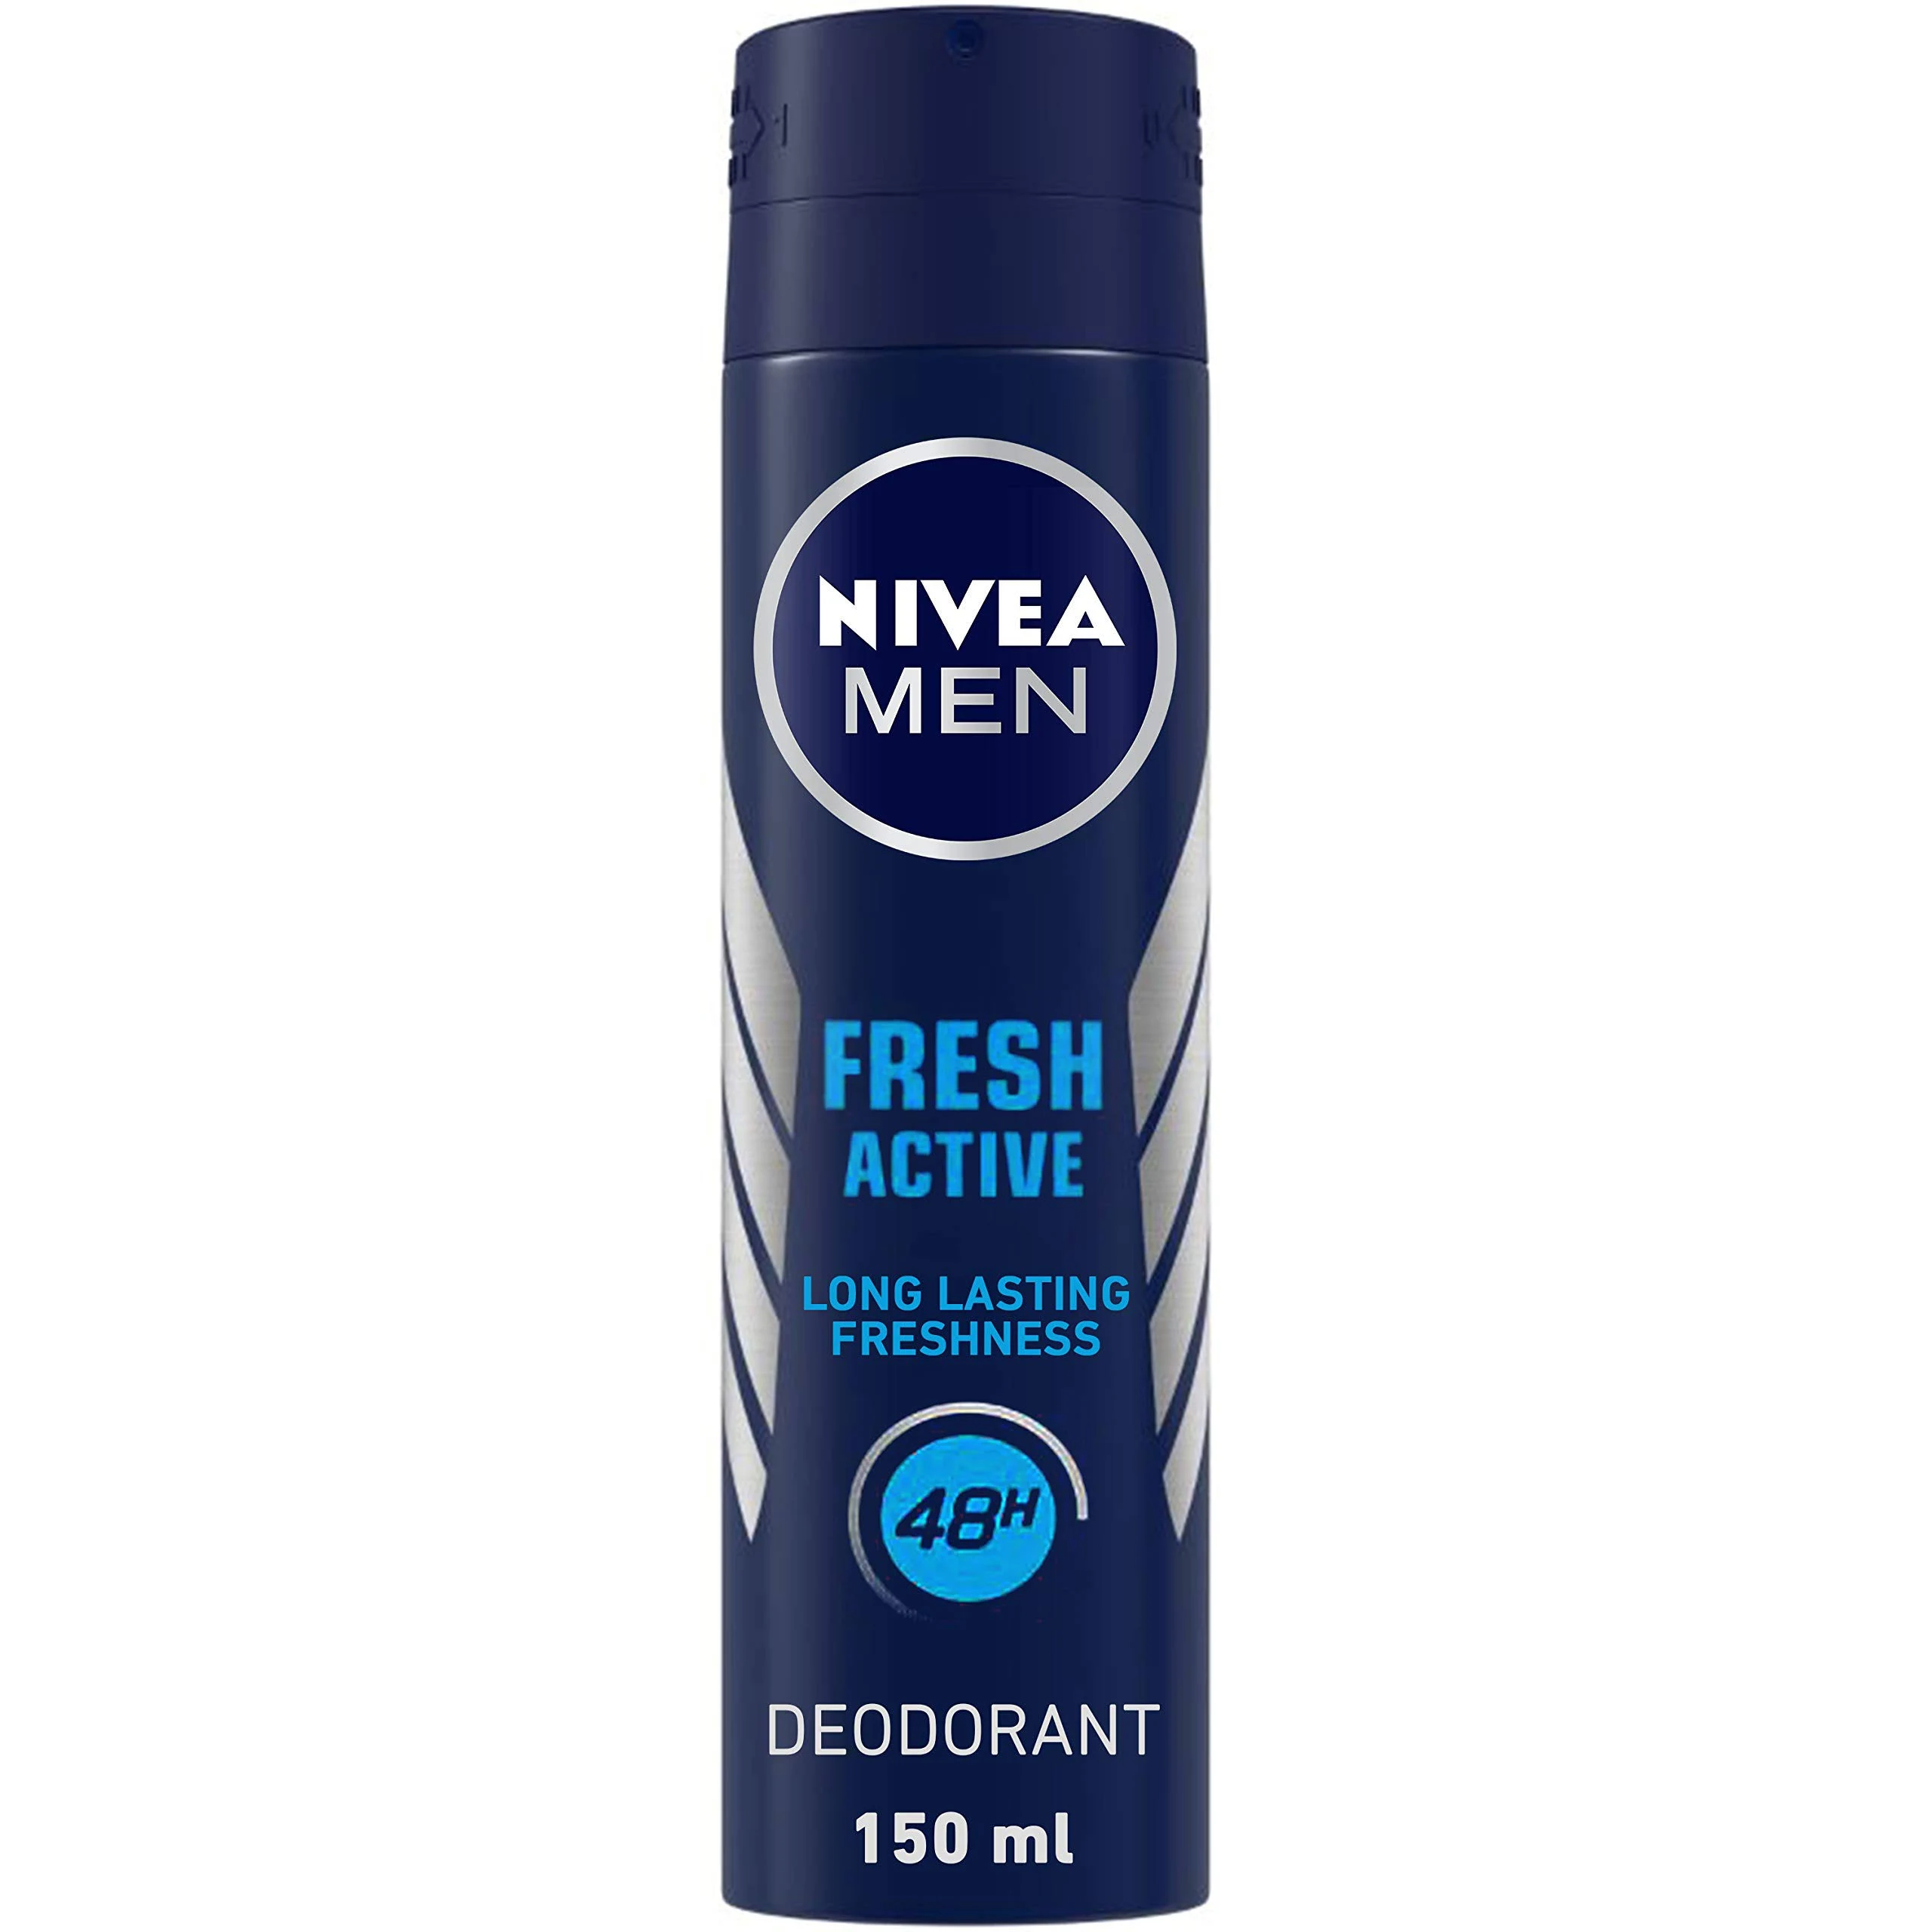 Deodorant Powerful Protection & Freshness NIVEA Dry Fresh